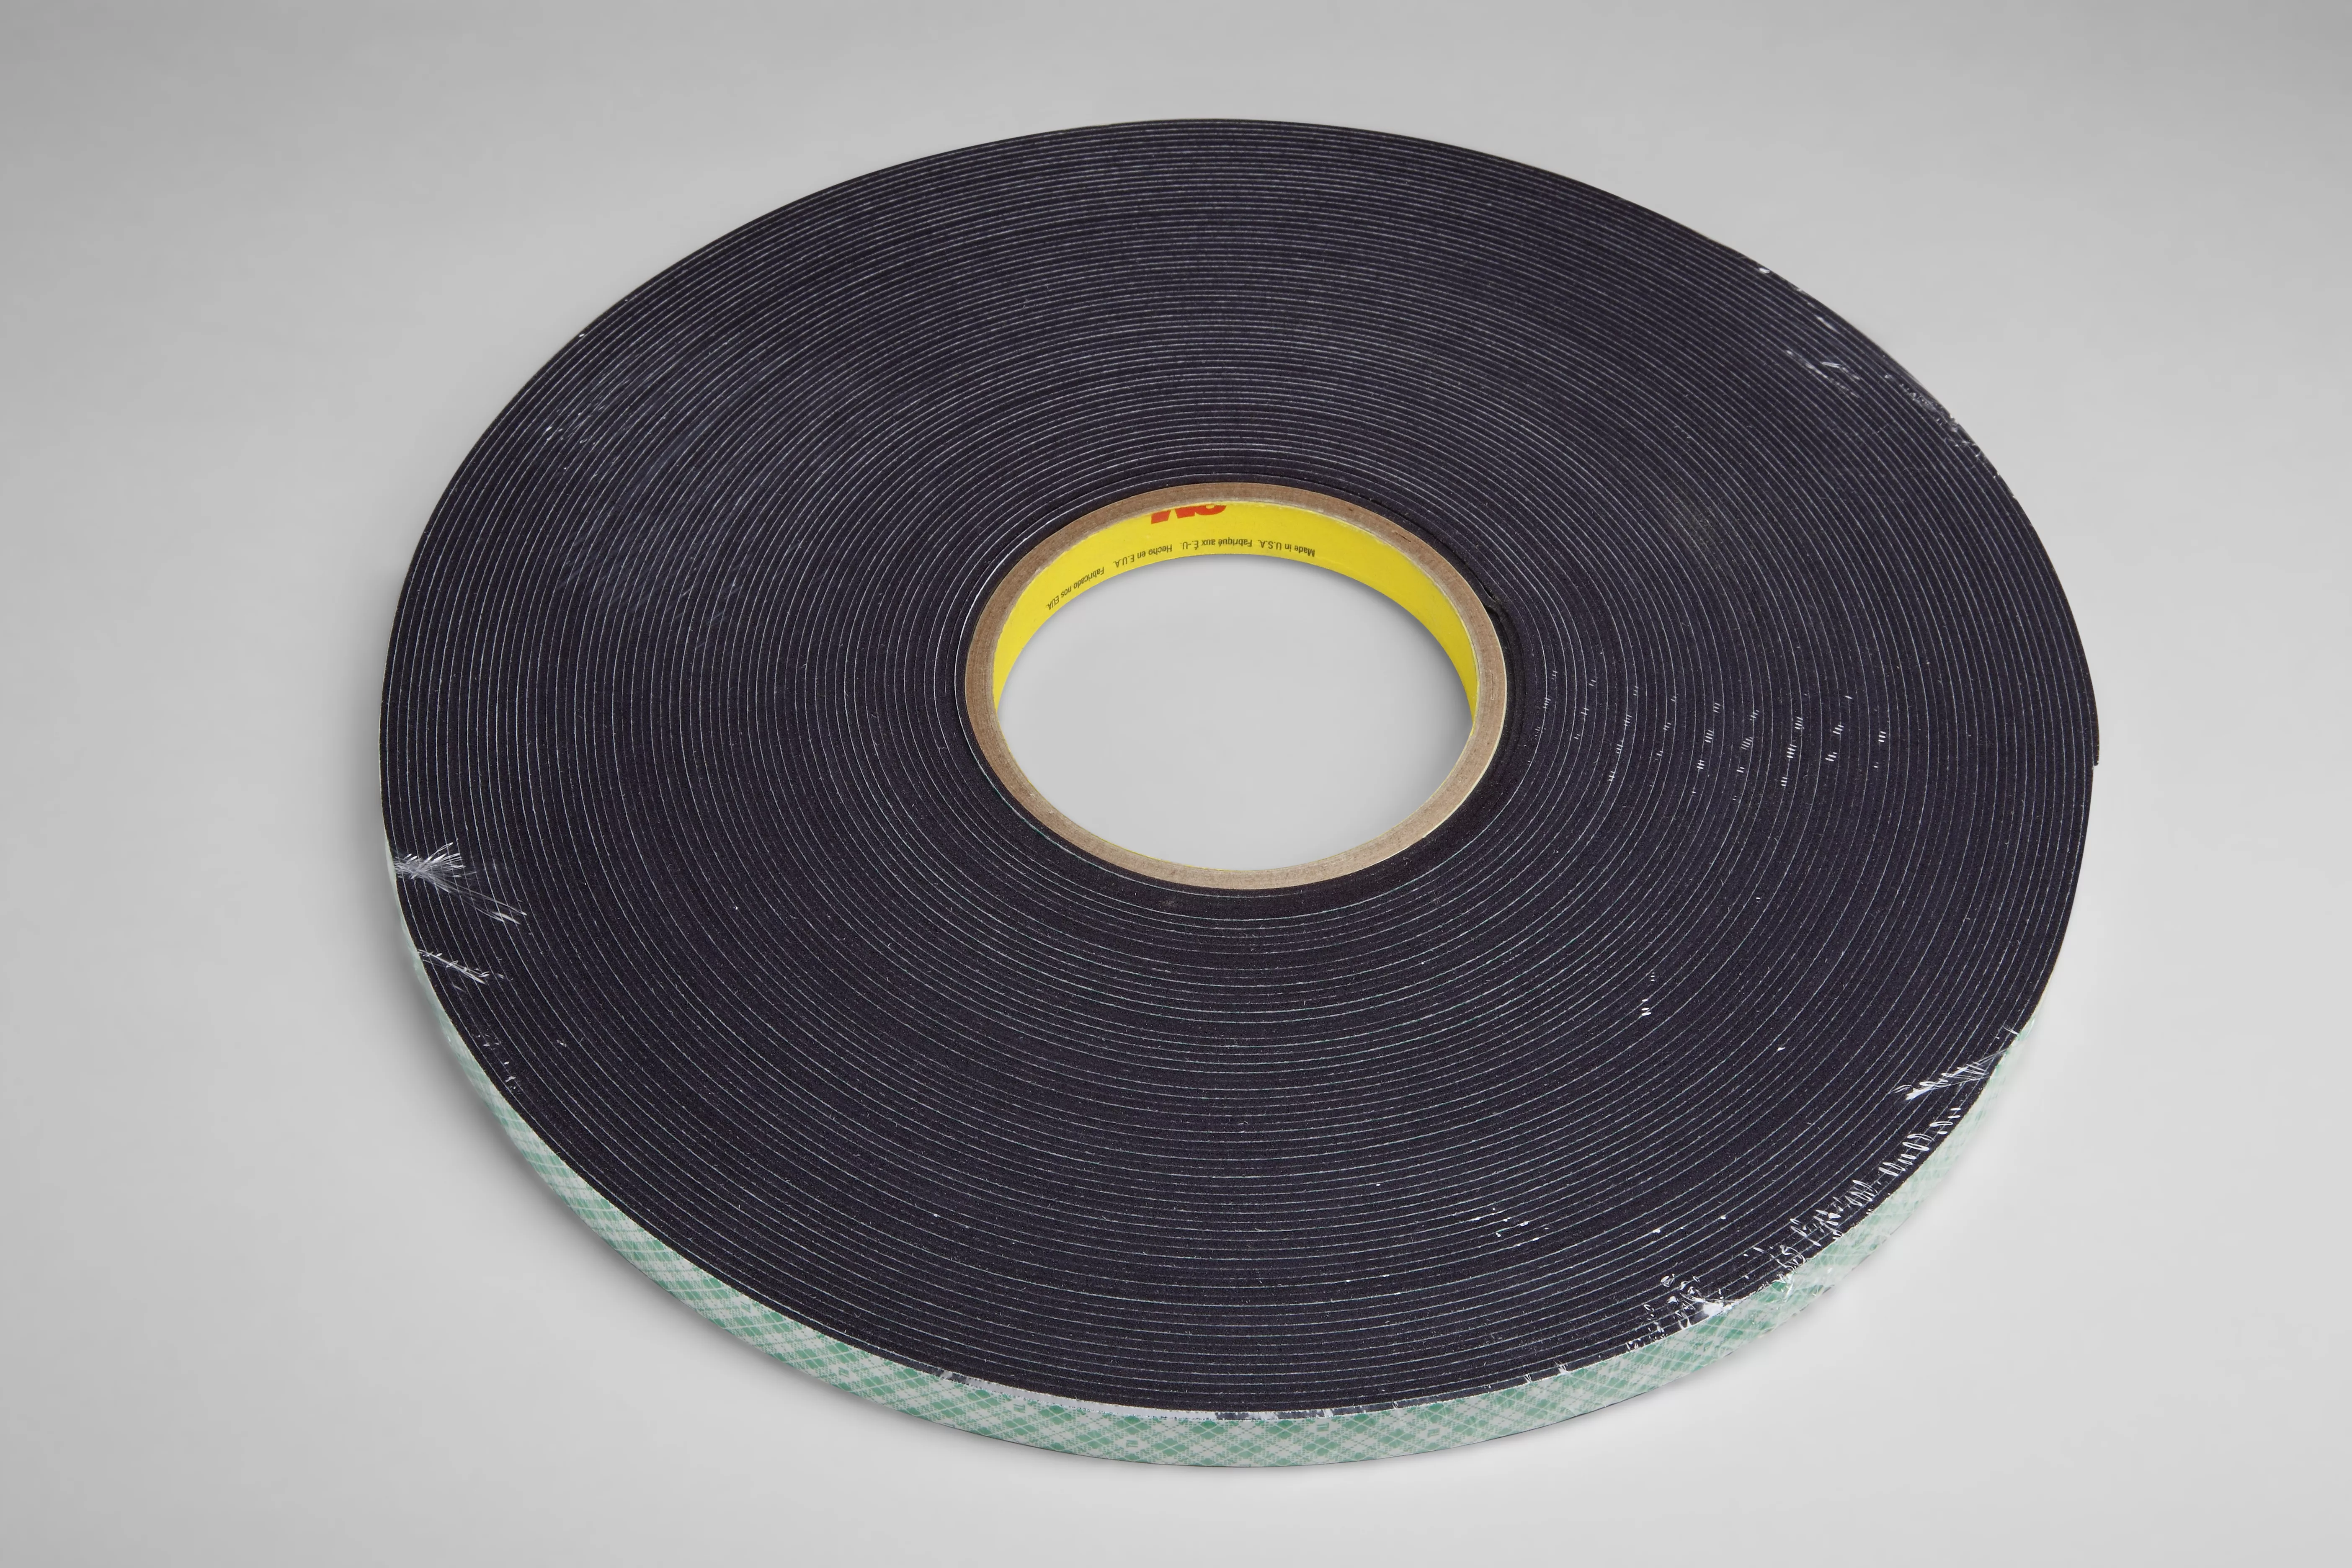 3M™ Double Coated Urethane Foam Tape 4056, Black, 1/2 in x 36 yd, 62
mil, 18 Roll/Case